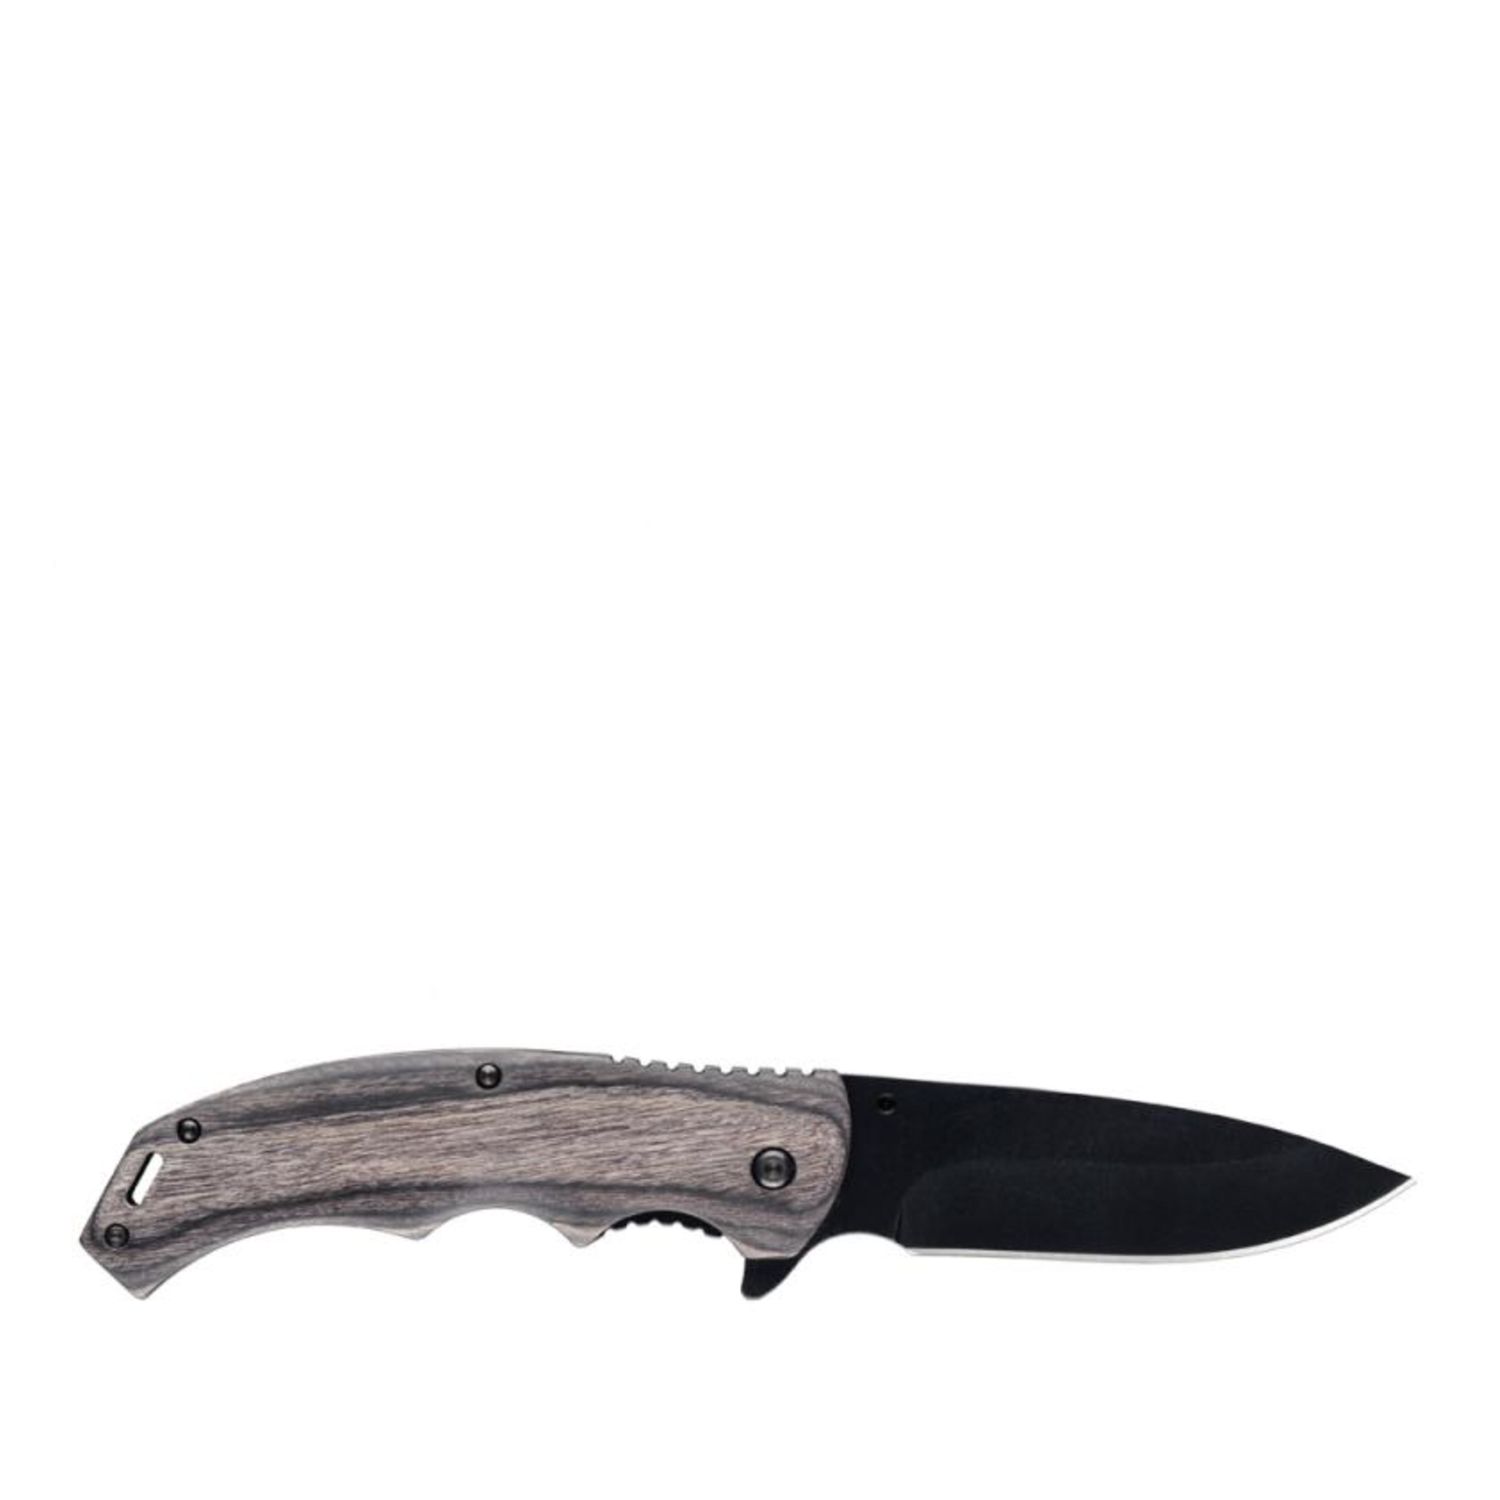 Нож Stinger Knives 120 мм рукоять дерево/сталь Чёрный/Серый